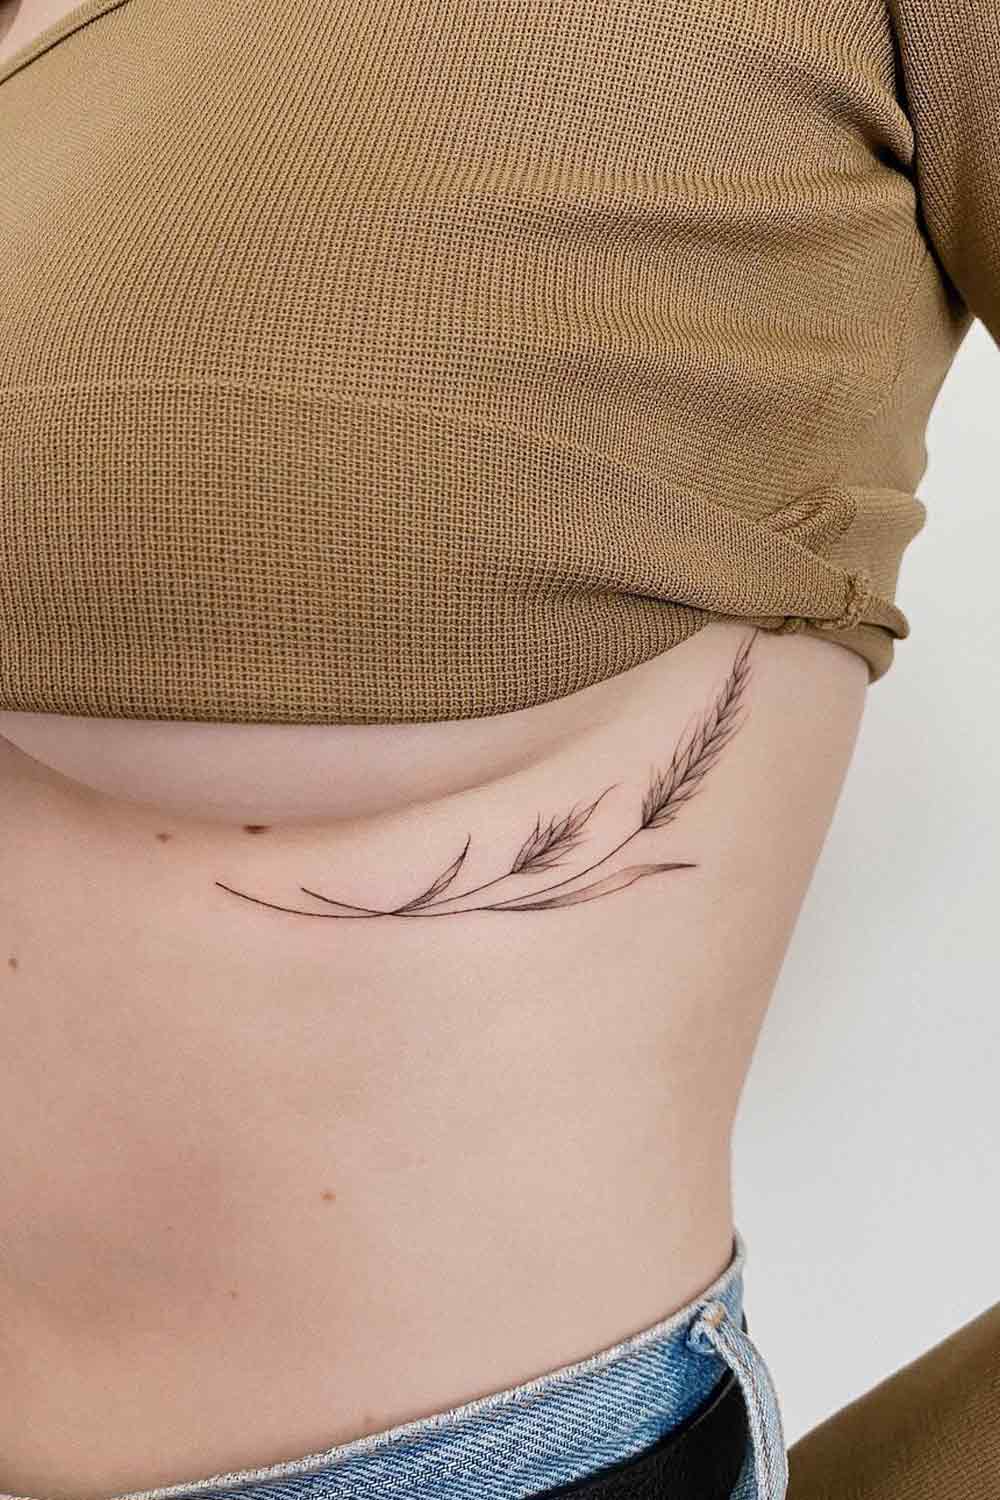 Benefits of Minimalist Tattoos for Women